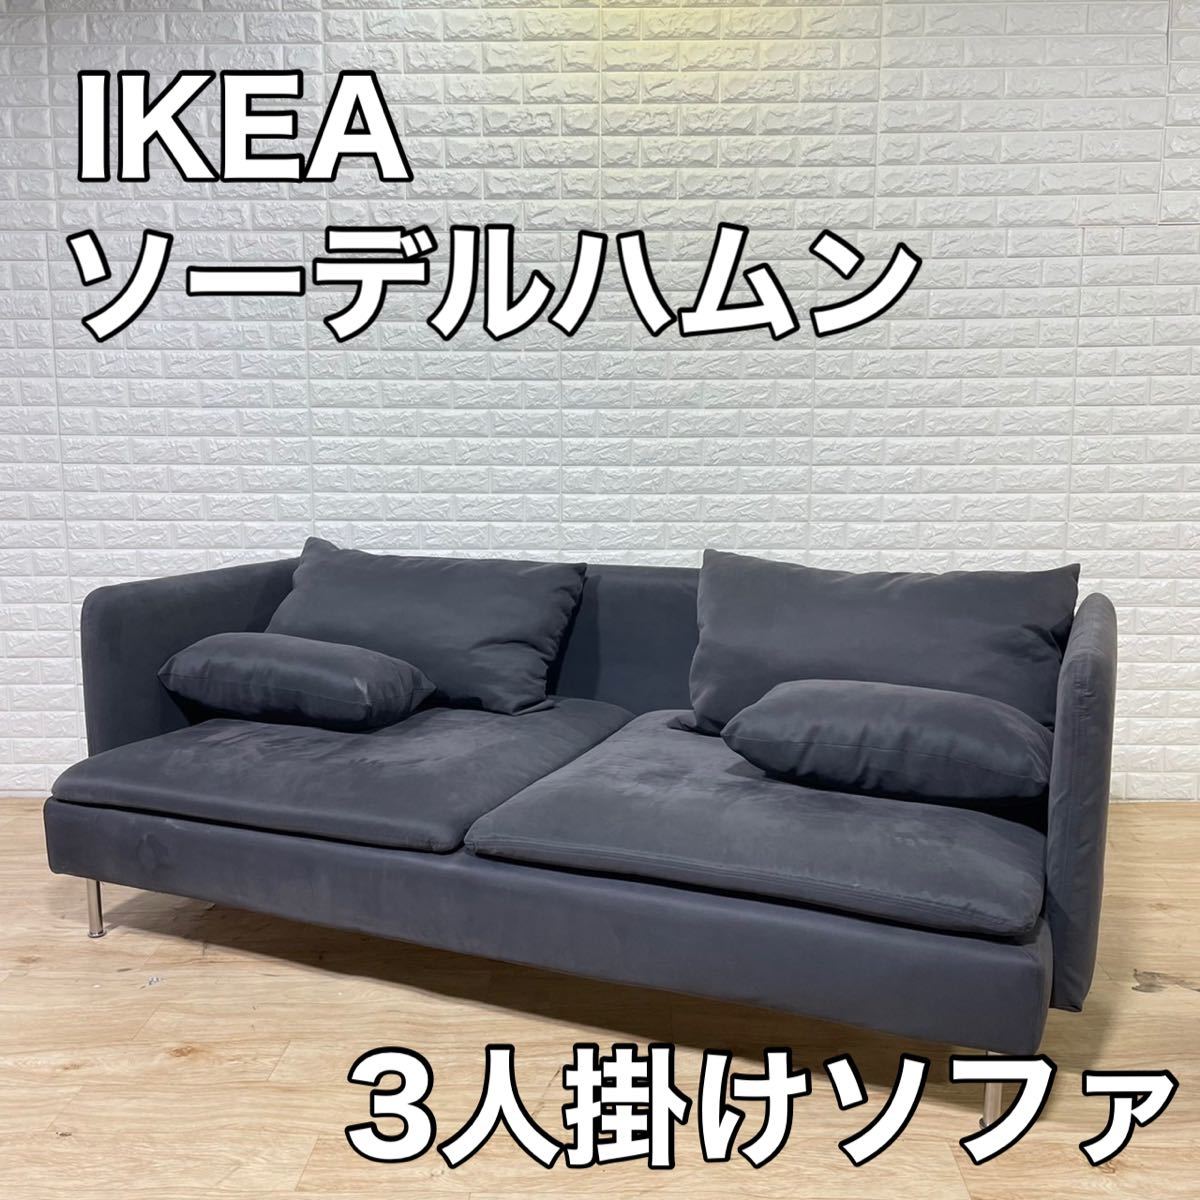 IKEA ソーデルハムン 3人掛け - ソファベッド